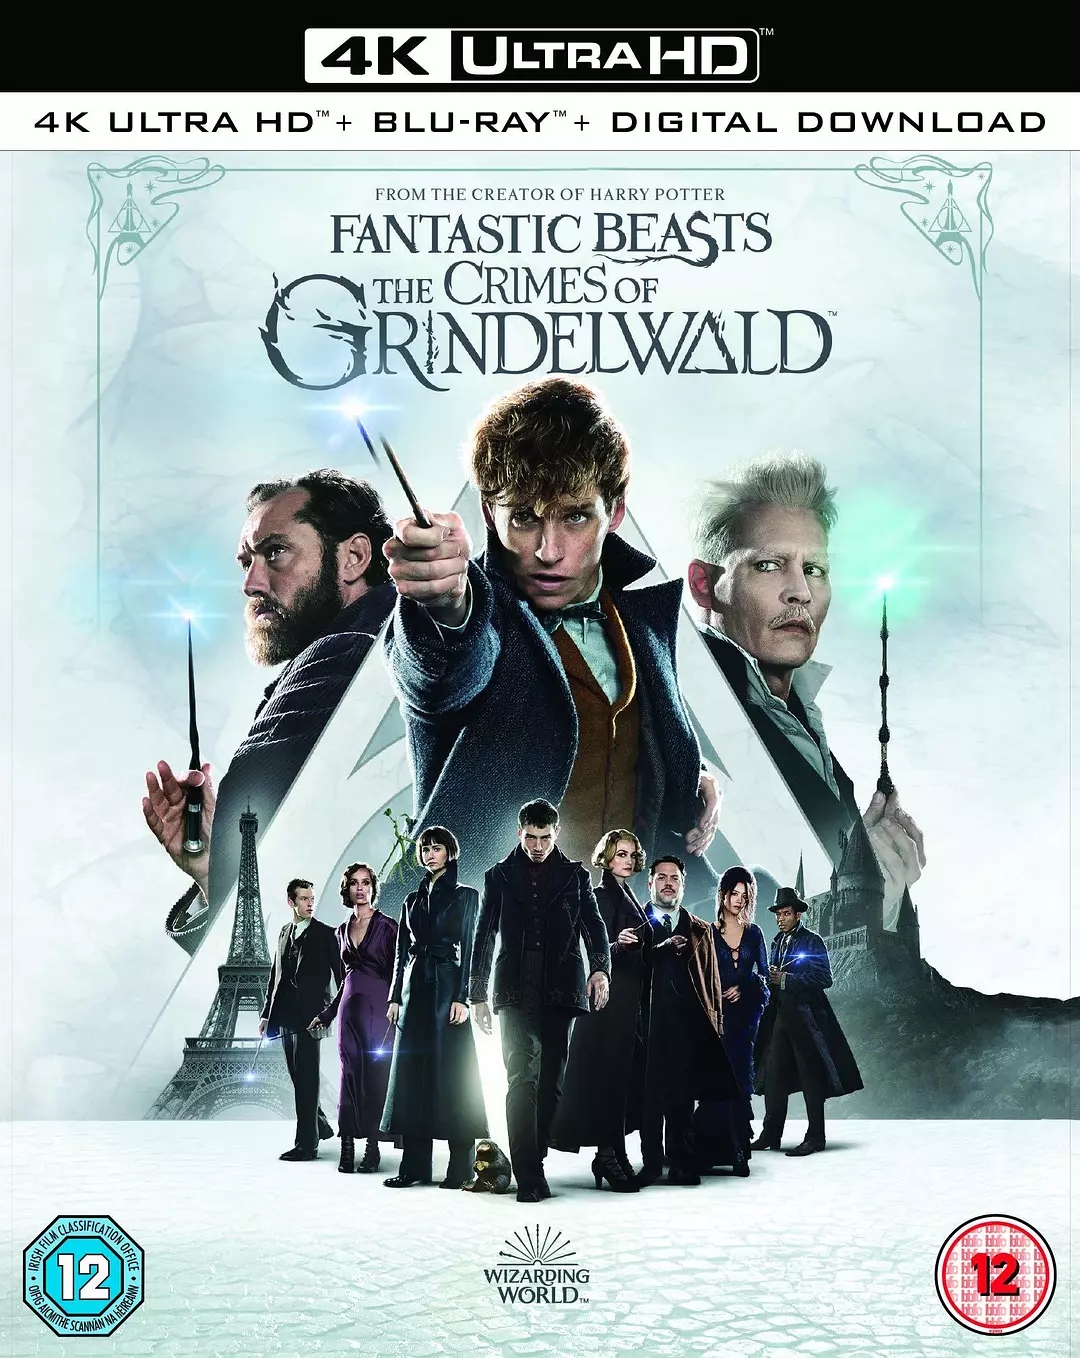 怪獸與葛林戴華德的罪行 (杜比全景聲) - 50G (4K) (Fantastic Beasts: The Crimes of Grindelwald)